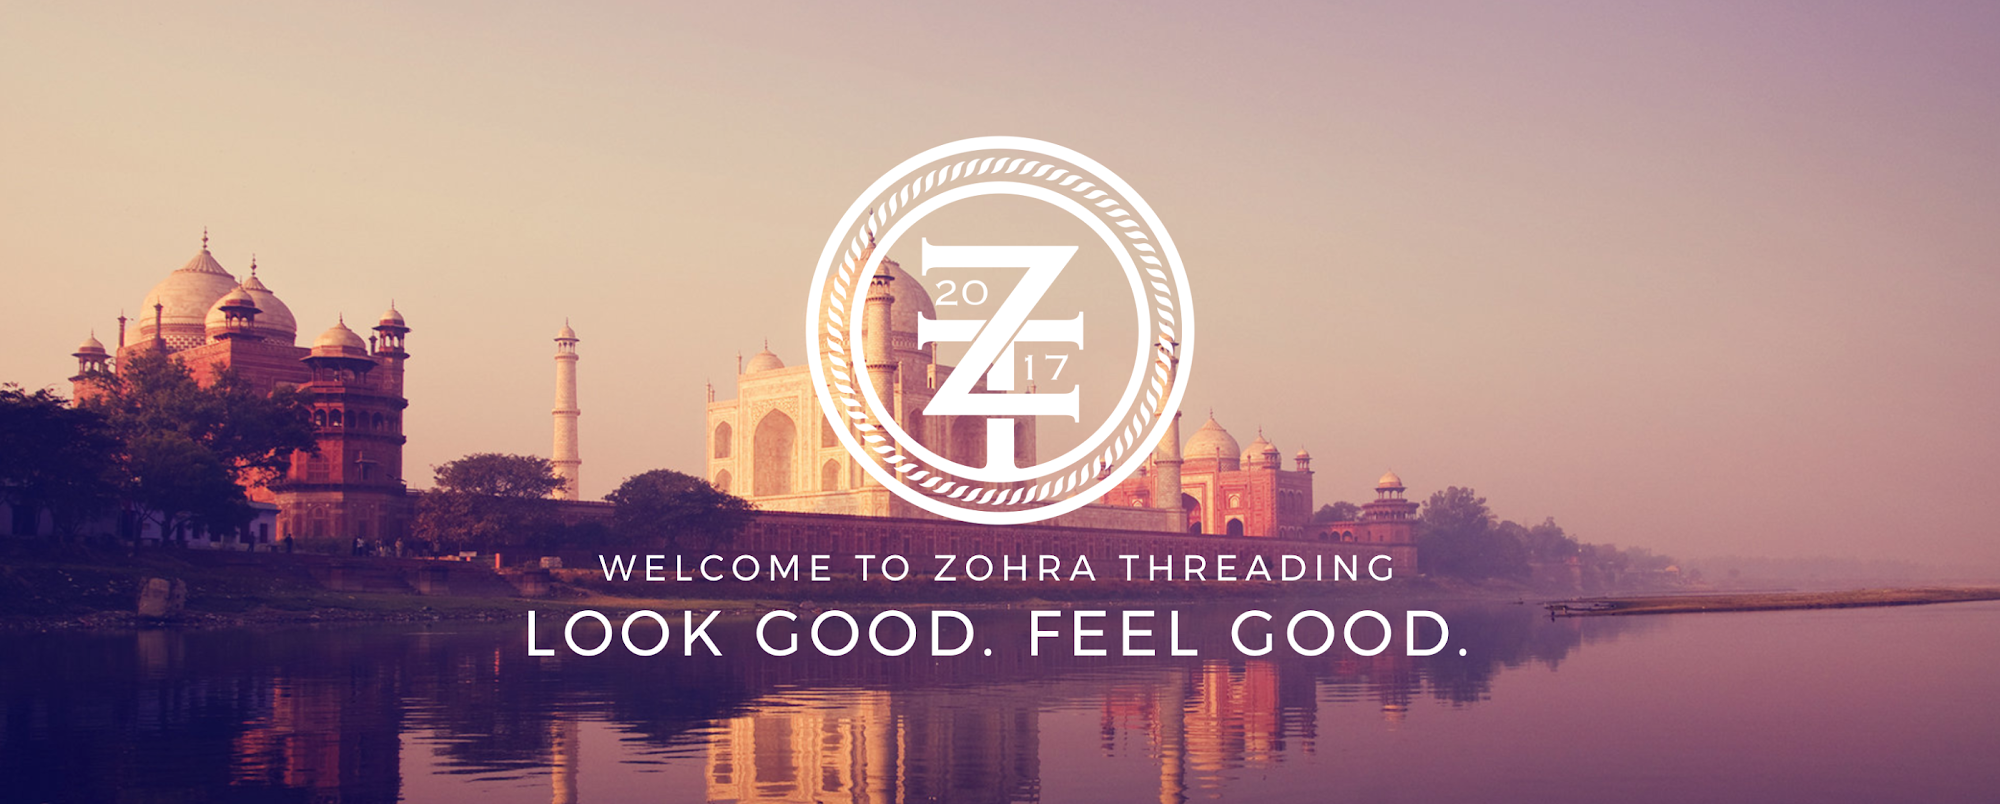 Zohra Threading